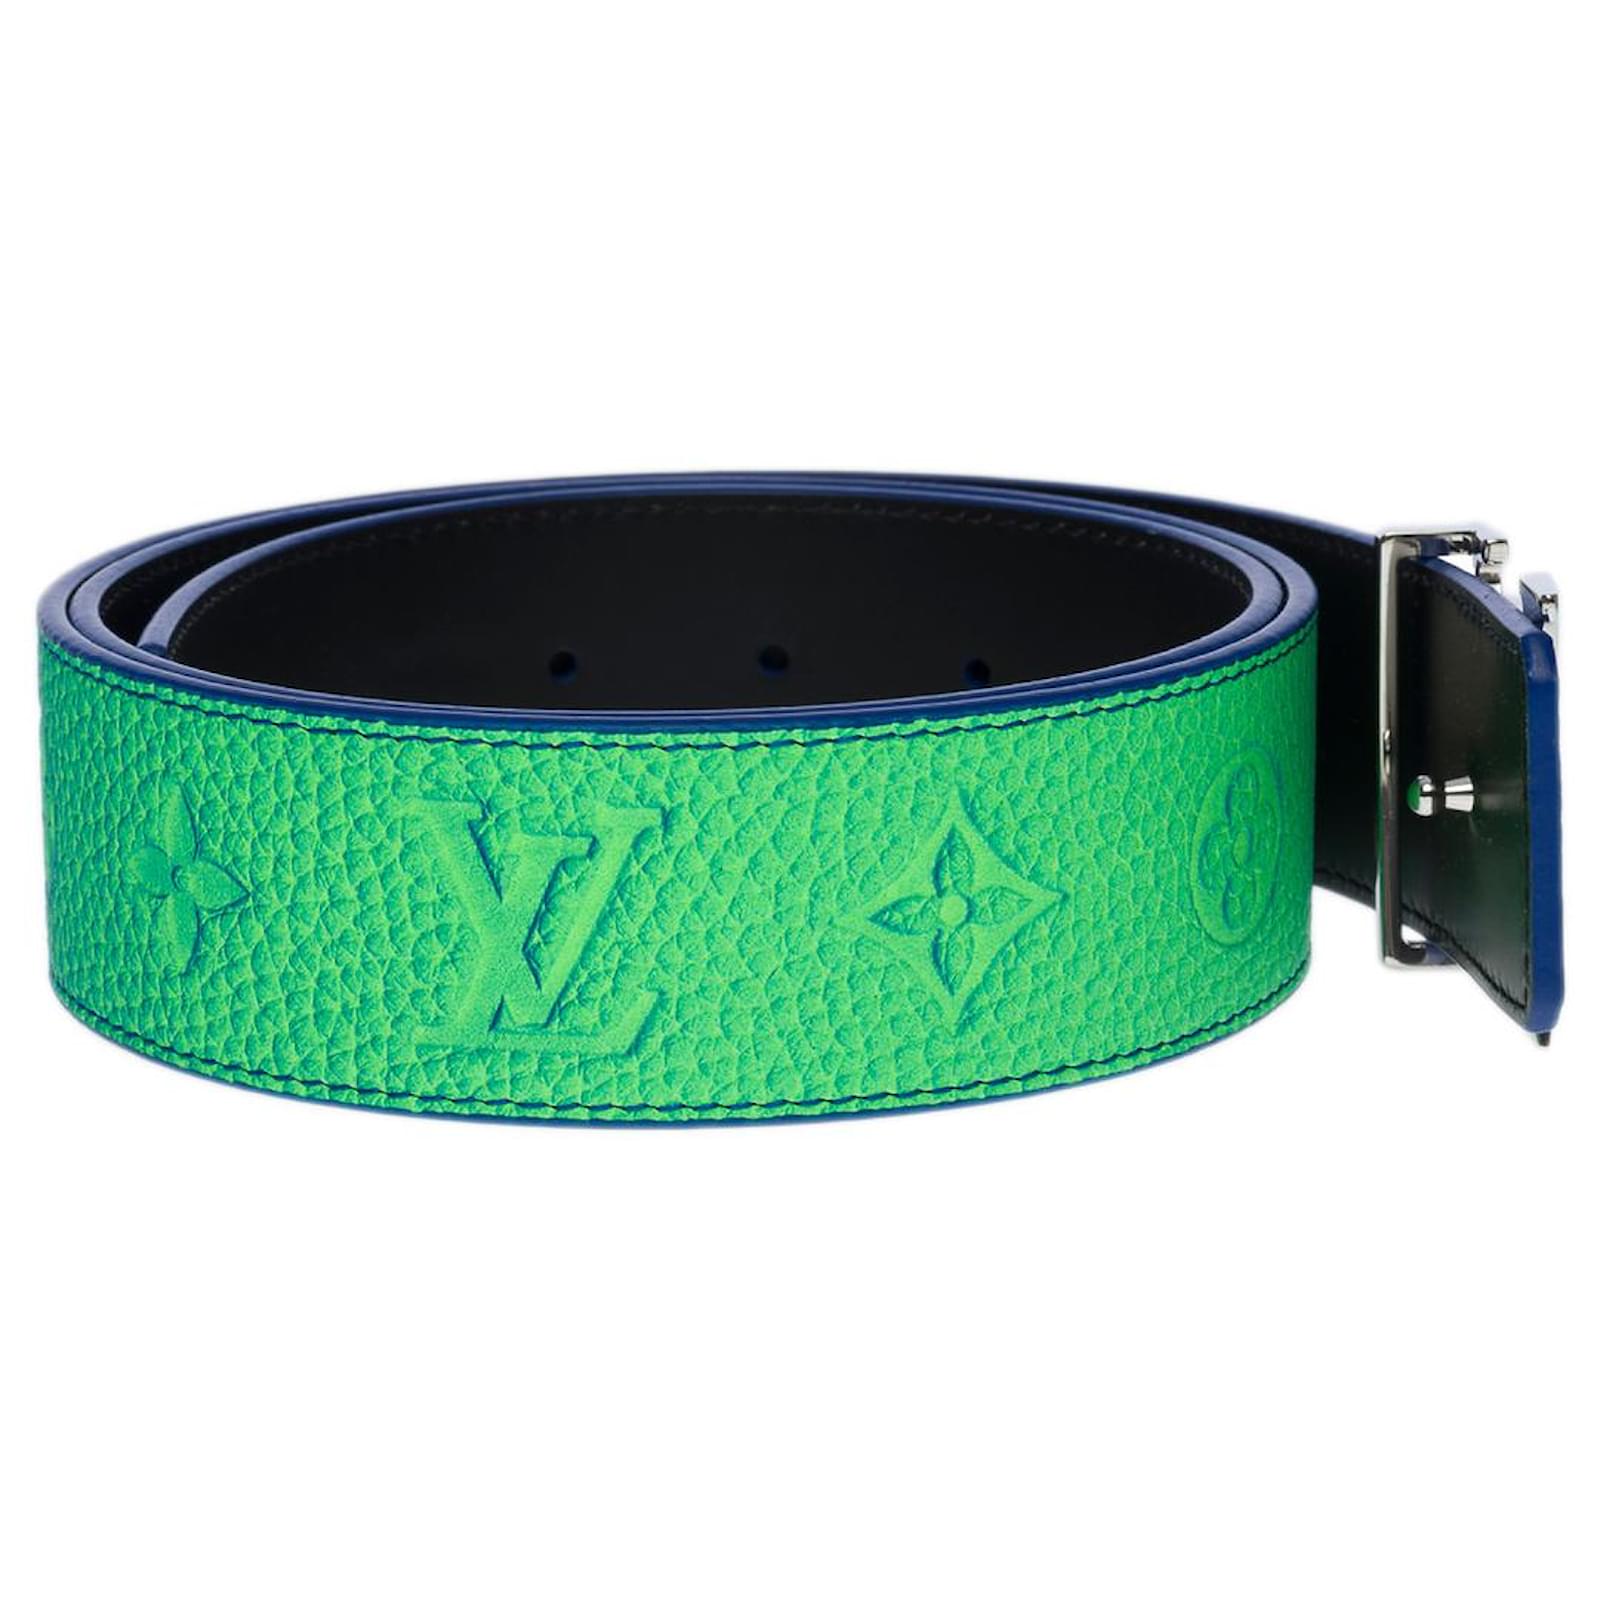 Louis Vuitton Blue & Green Illusion Monogram Belt